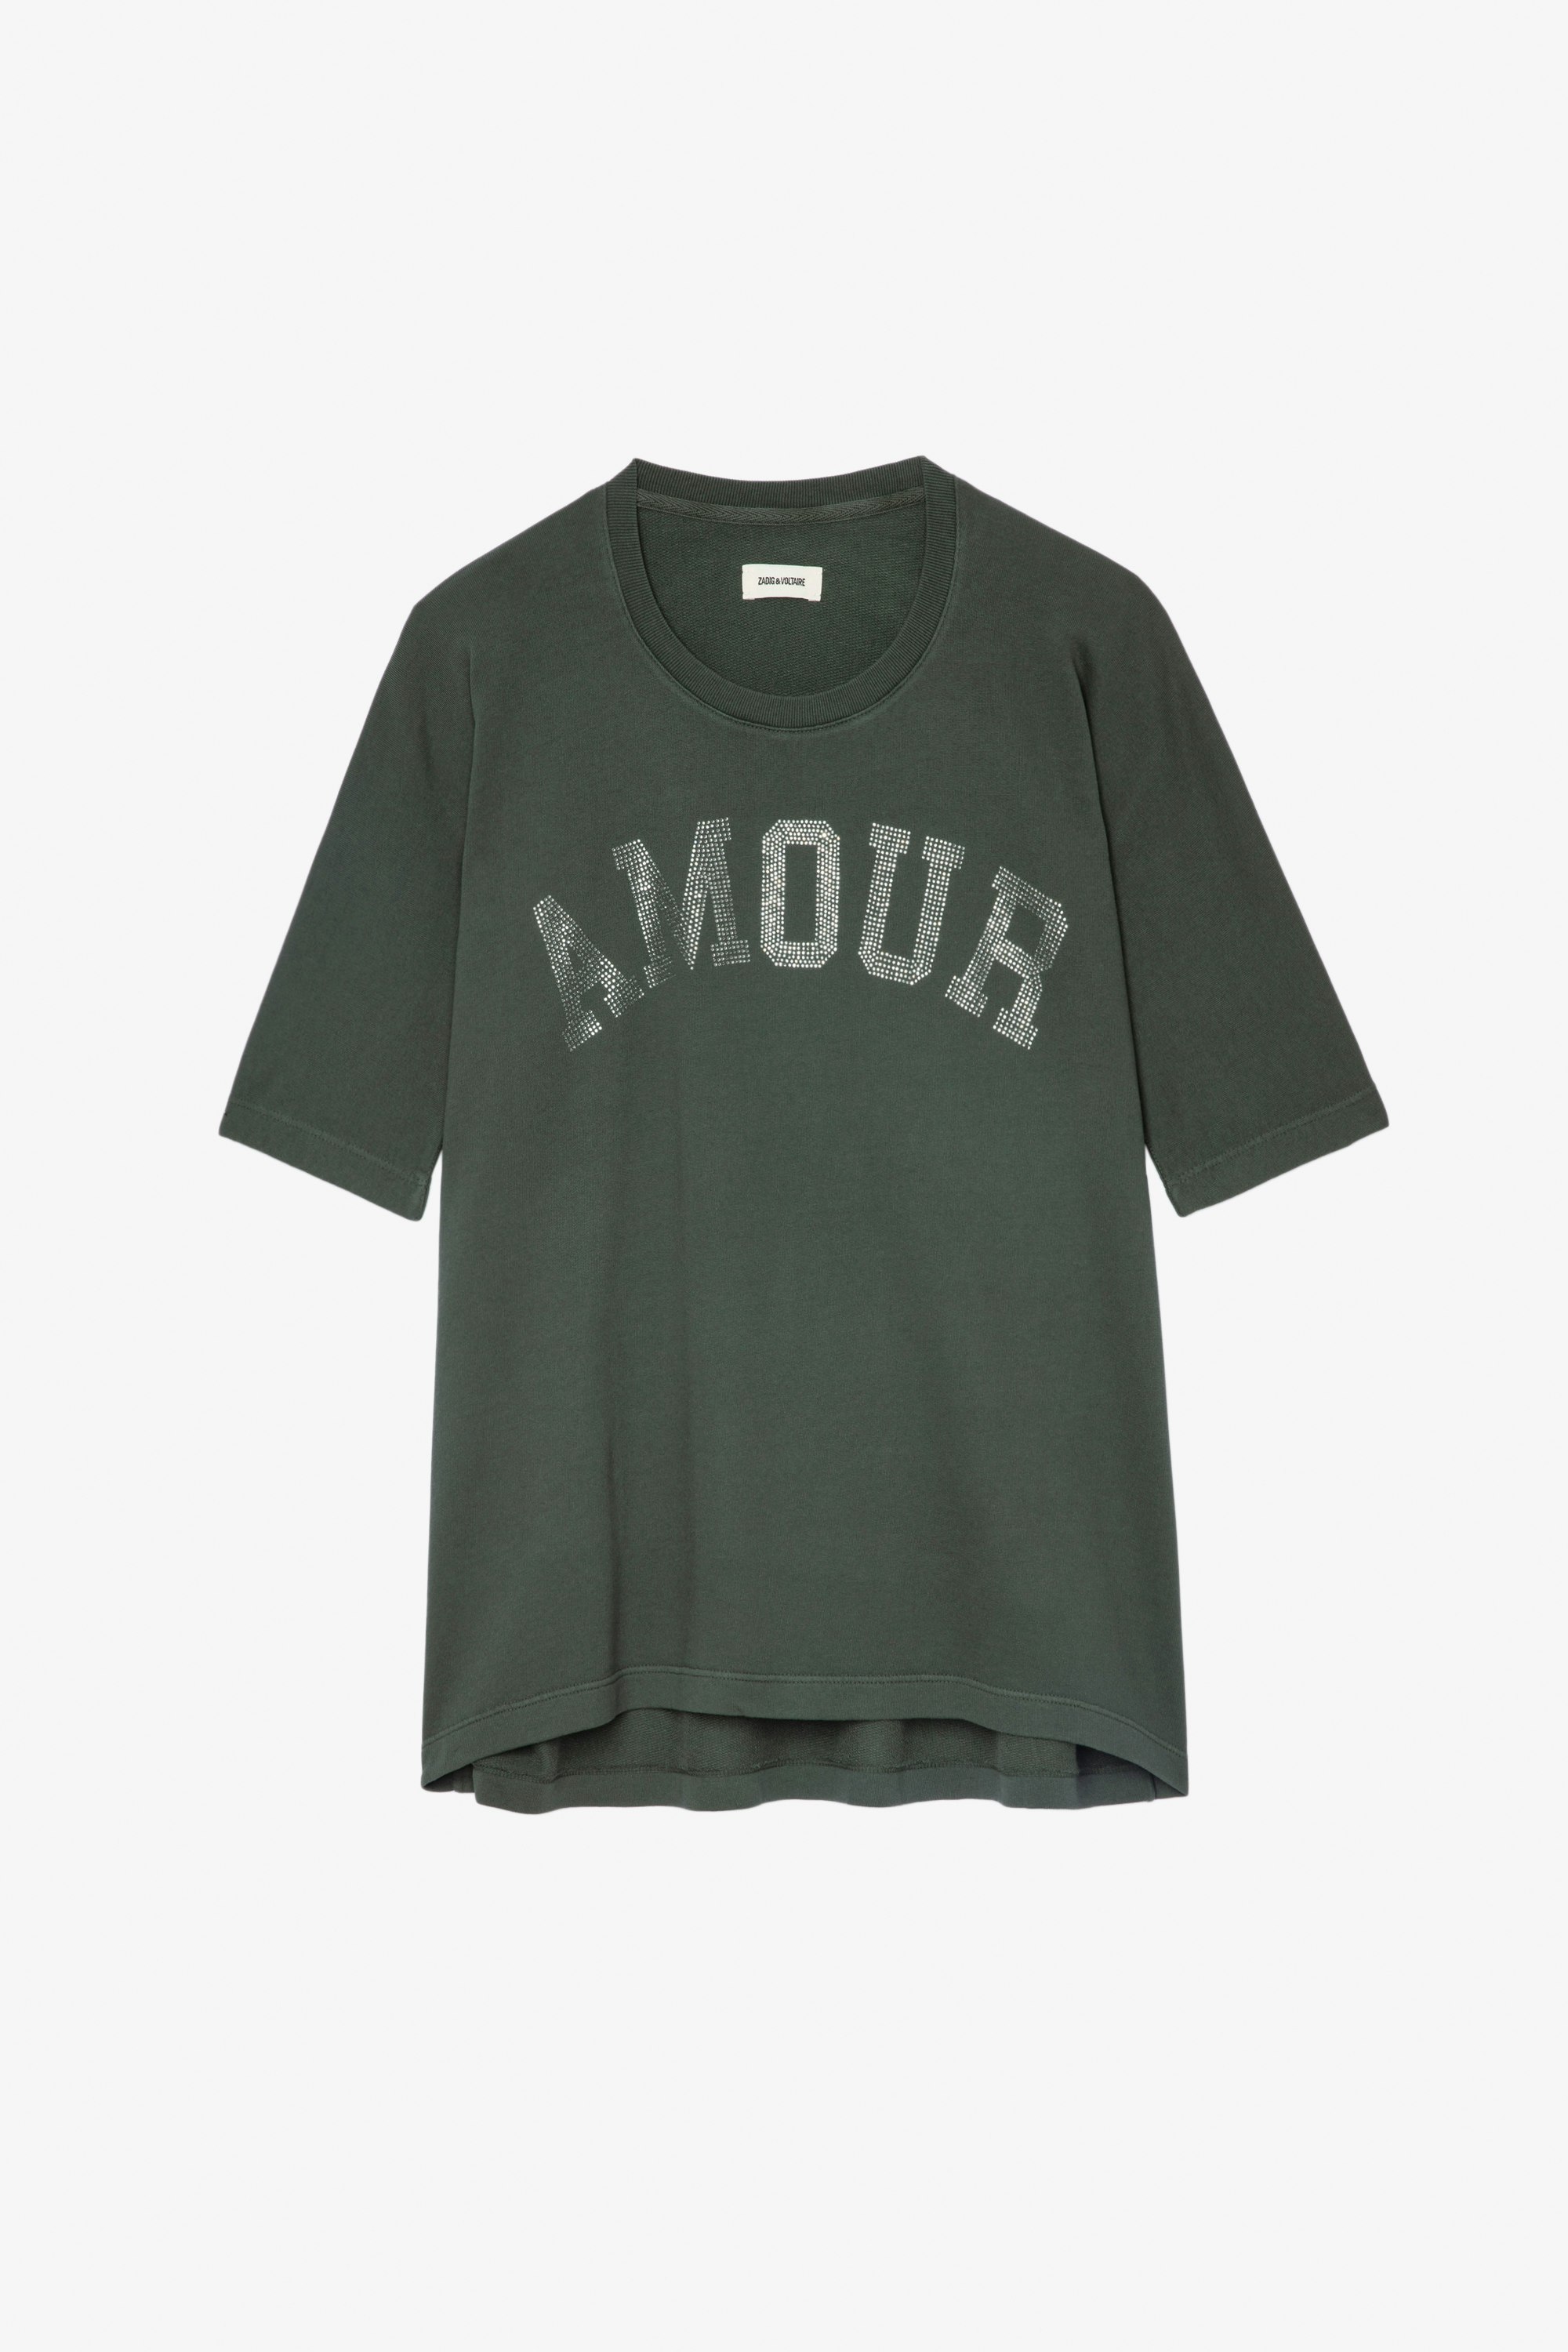 Portland Top Women's short-sleeved khaki top with rhinestone-set "Amour" slogan